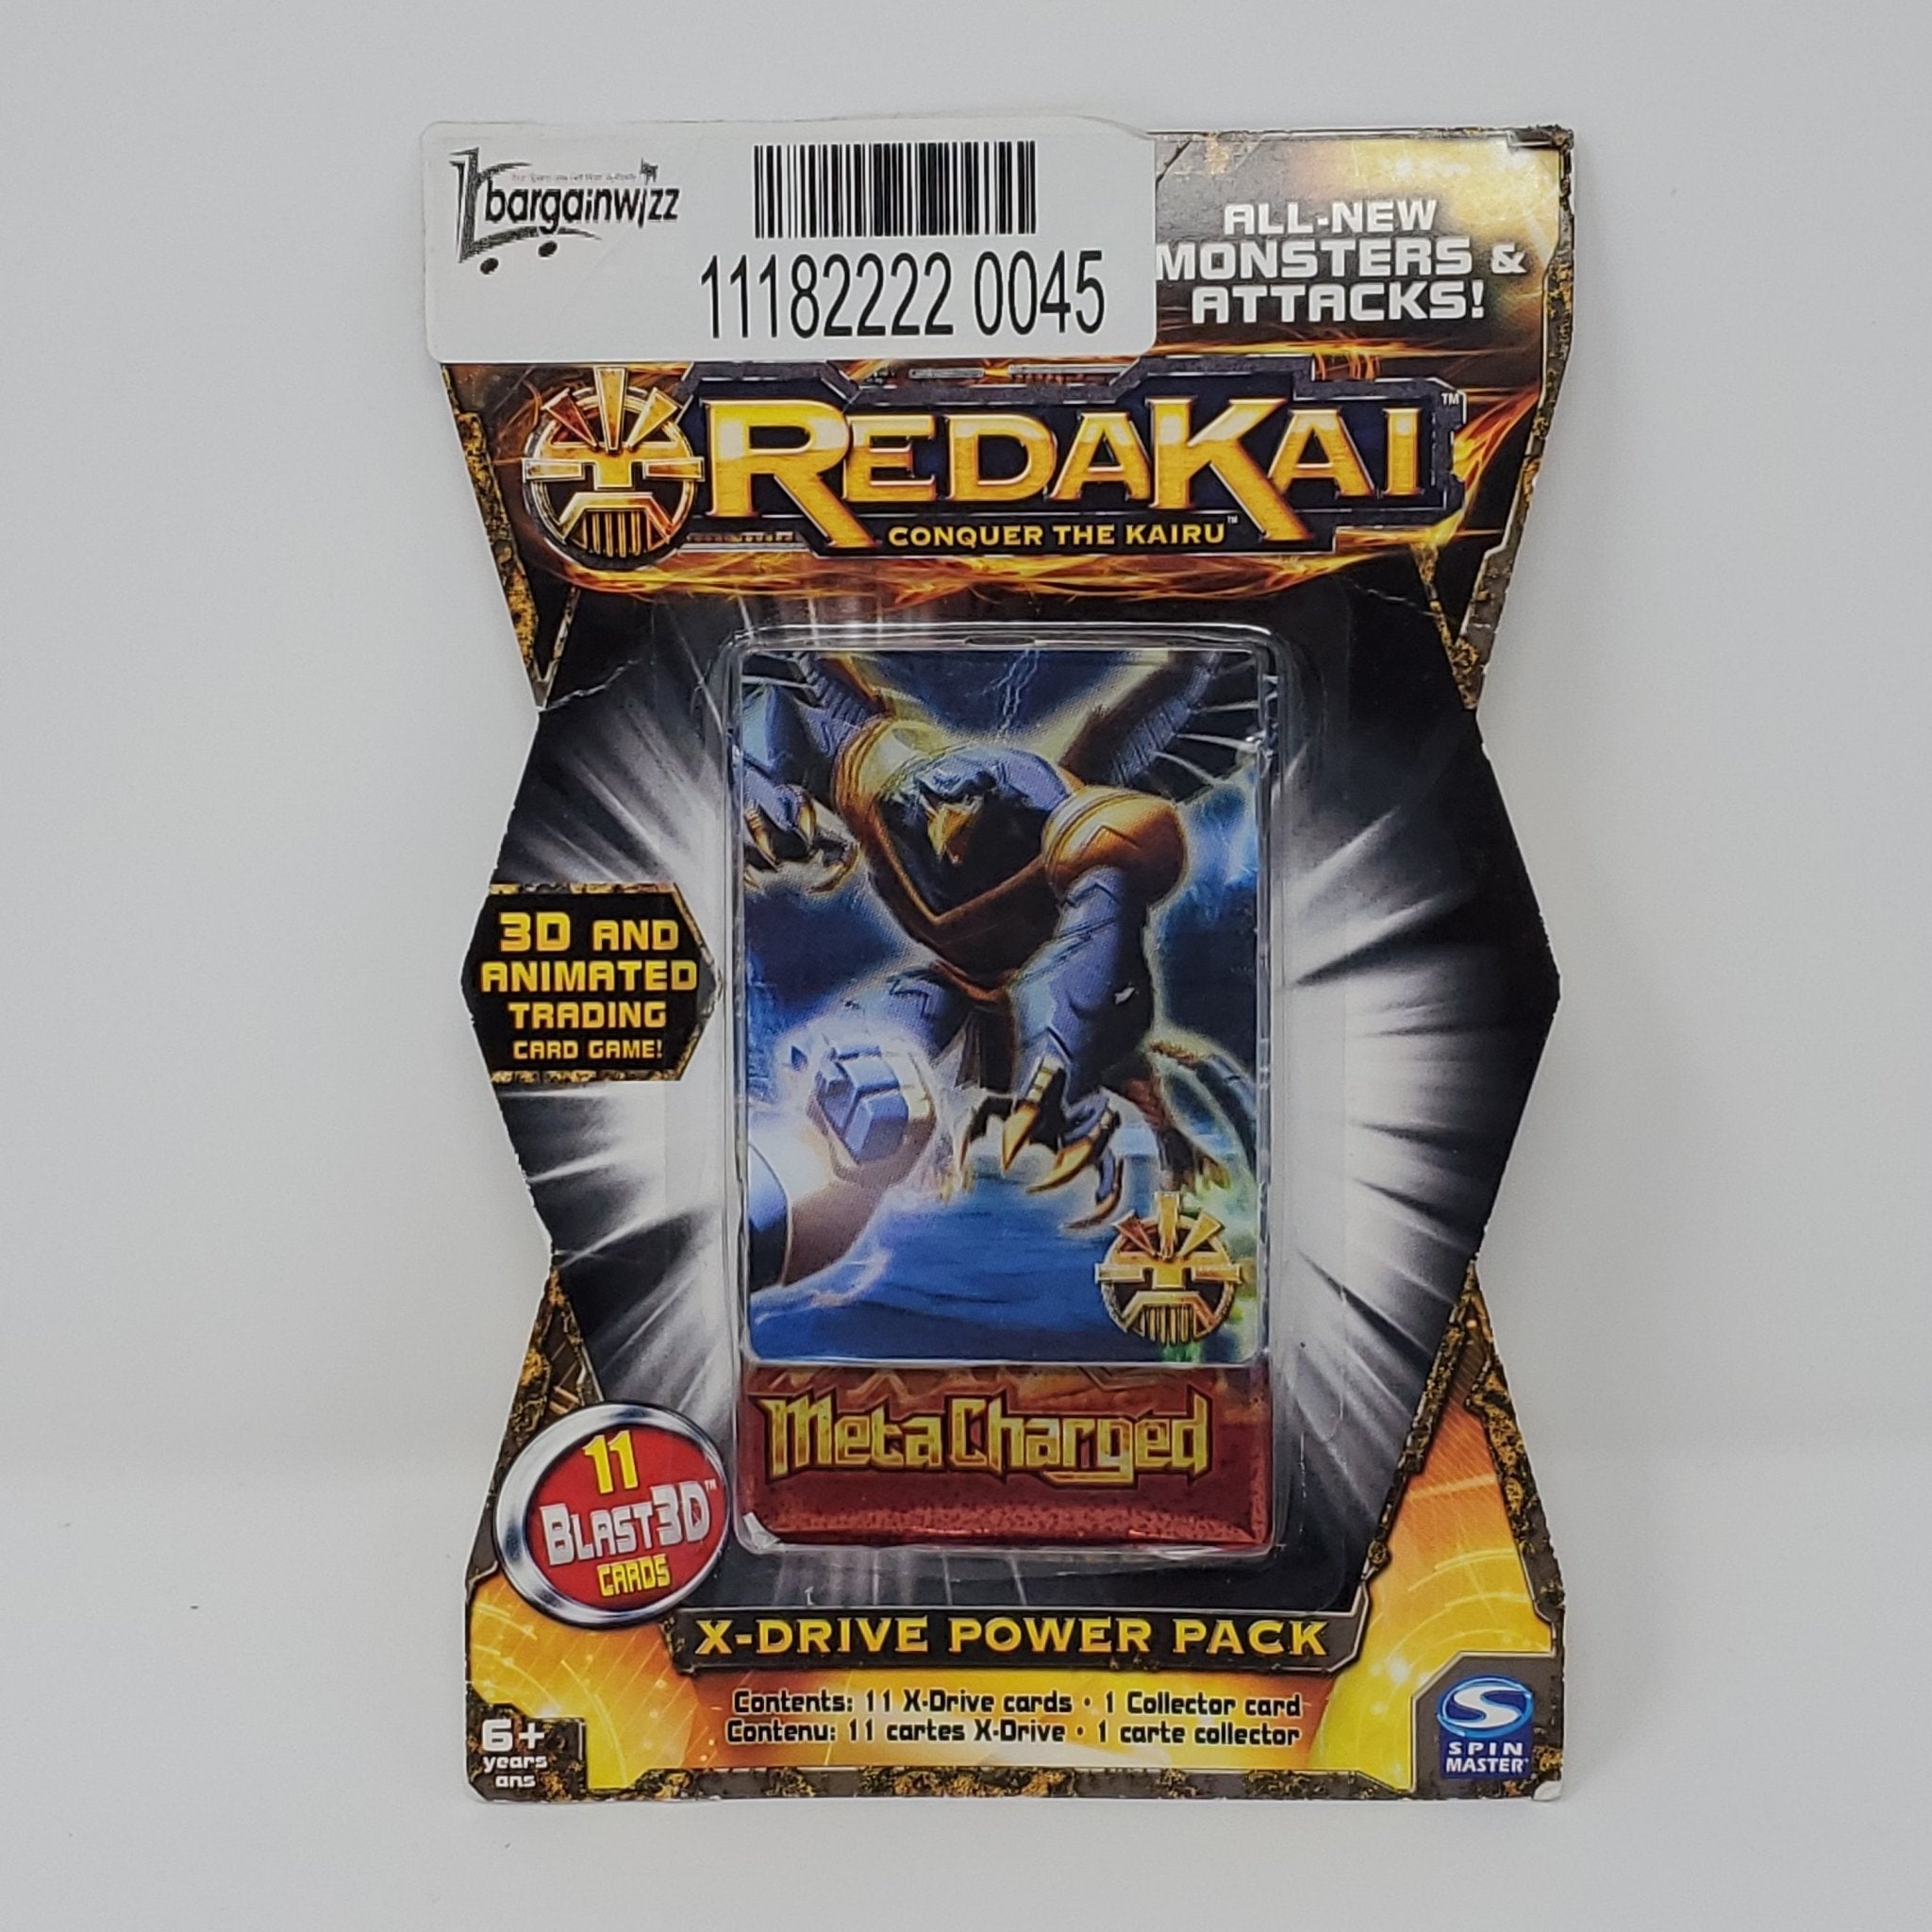 Redakai Conquer the Kairu 3D and animated trading card game - Bargainwizz